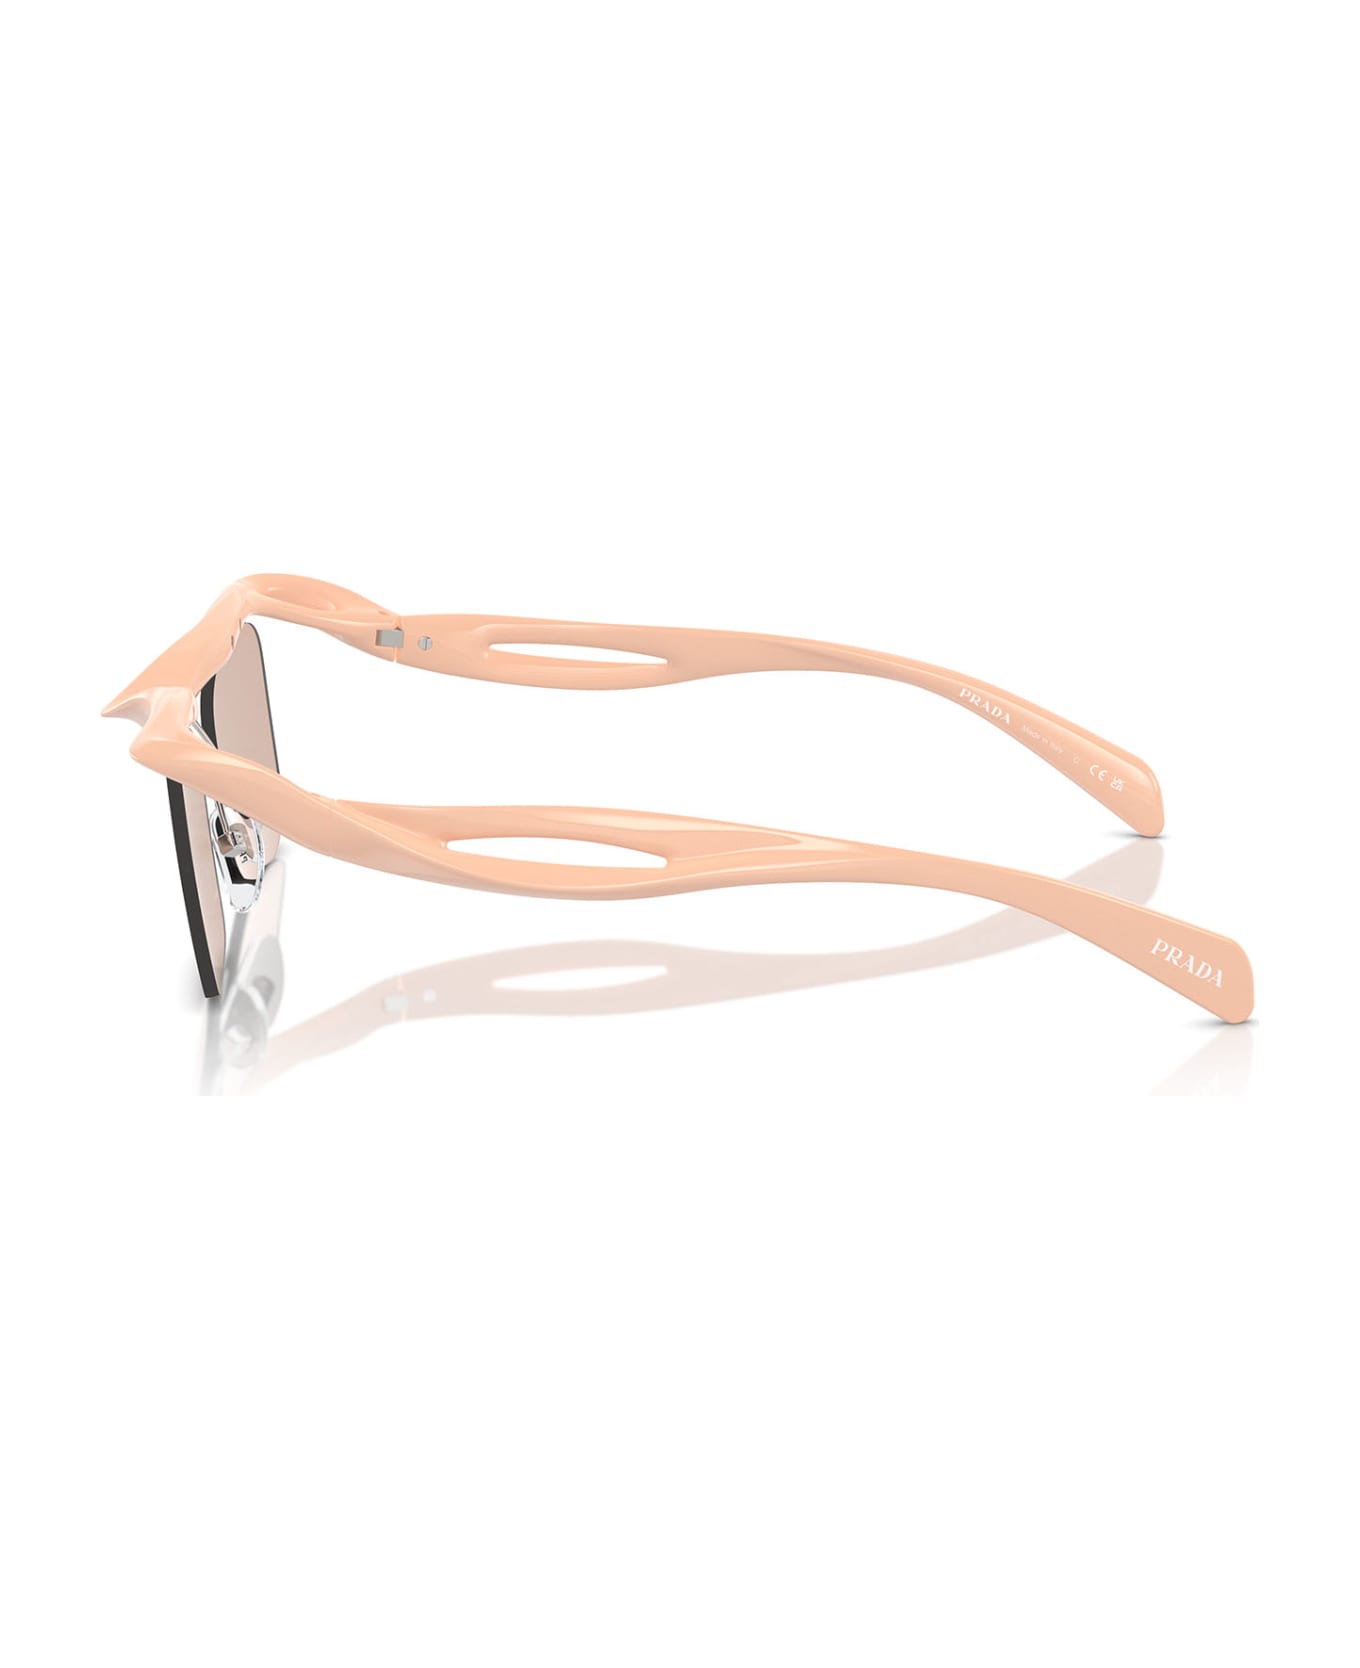 Prada Eyewear Pr A15s Peach Sunglasses - Peach